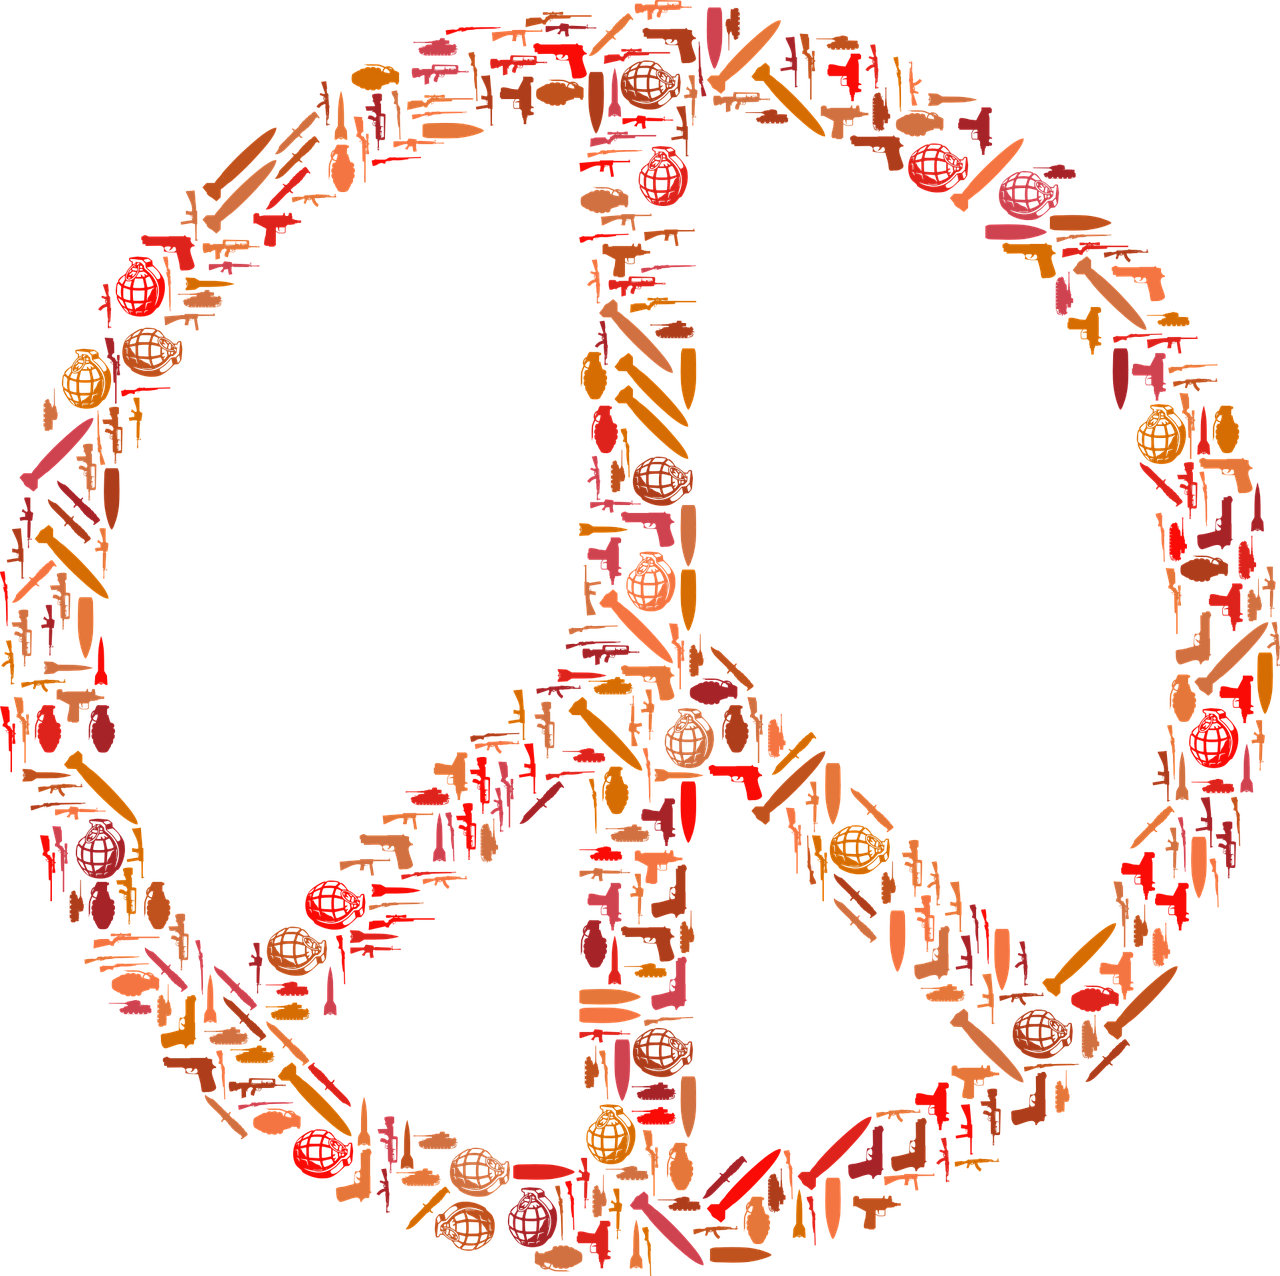 peace sign symbol free photo